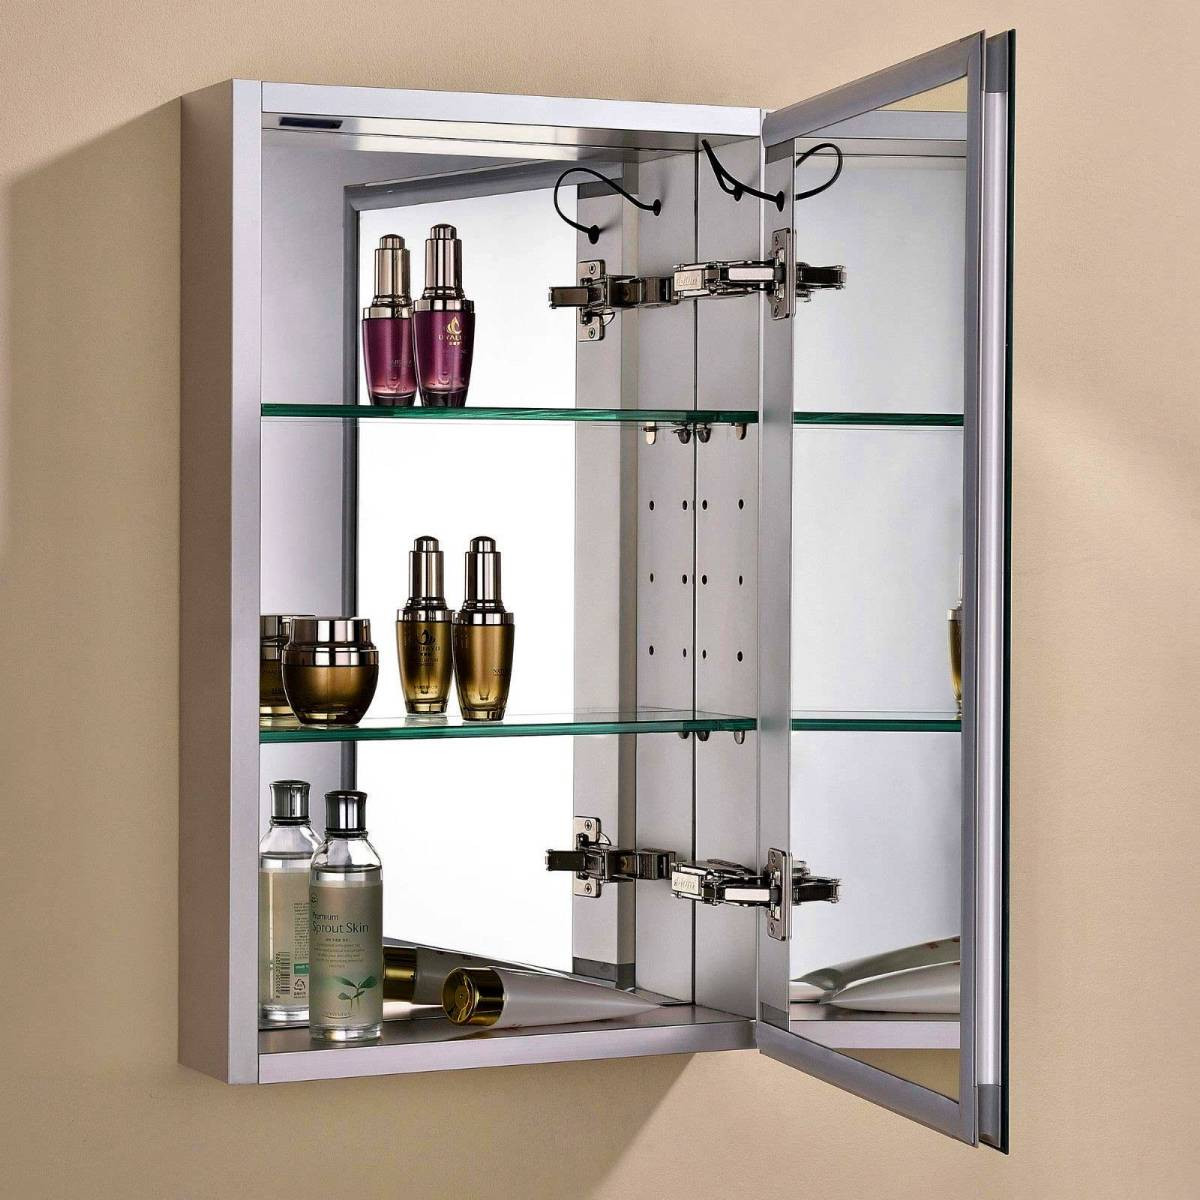 Bathroom Mirror Cabinet With Light
 17 Superior Bathroom Mirrors With Lights And Shaver Socket